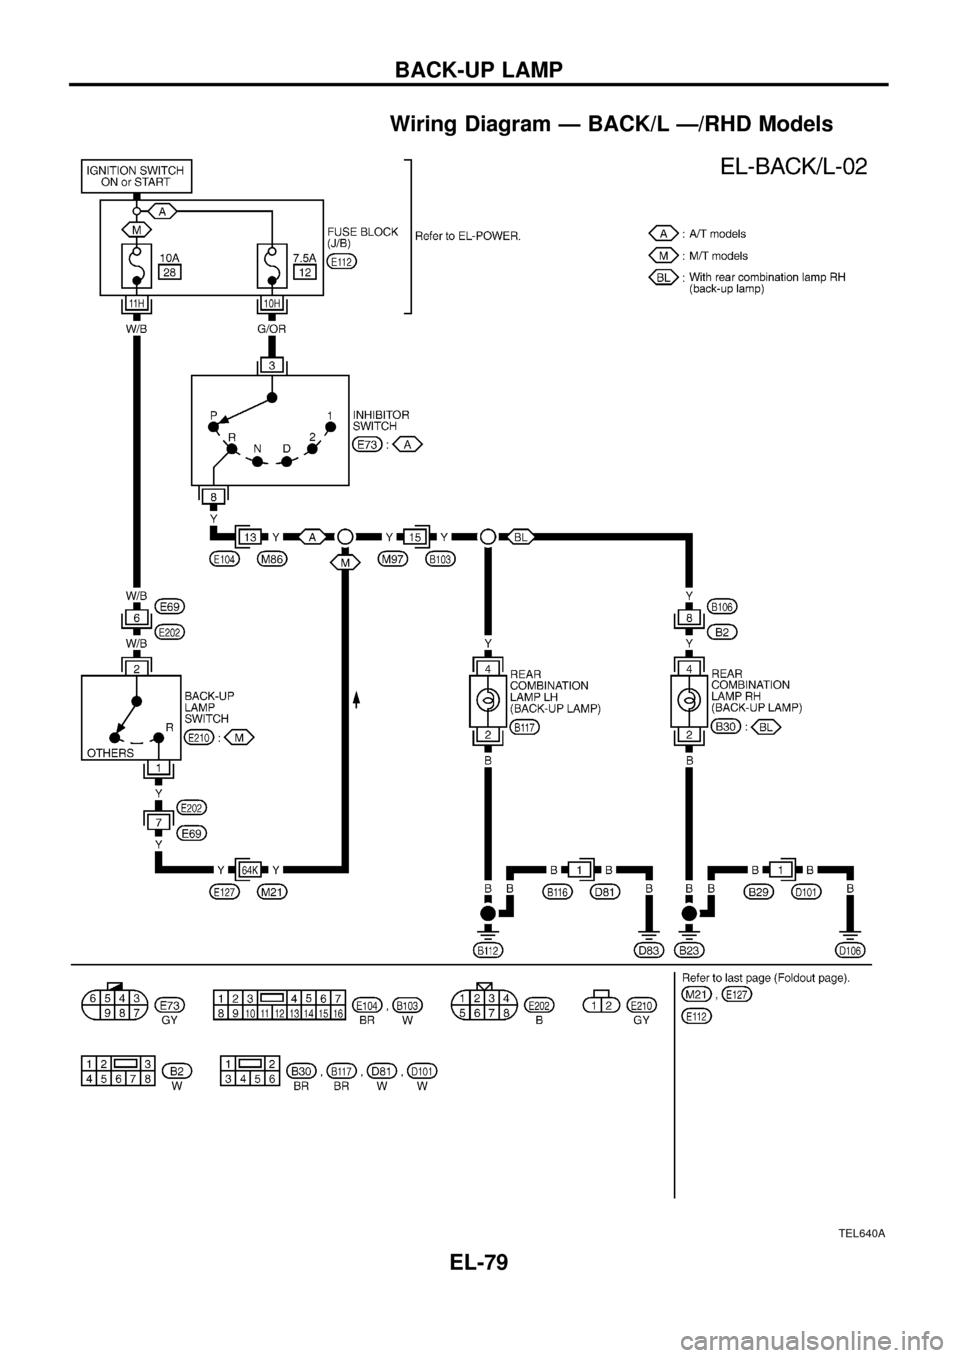 NISSAN PATROL 1998 Y61 / 5.G Electrical System Manual Online Wiring Diagram Ð BACK/L Ð/RHD Models
TEL640A
BACK-UP LAMP
EL-79 